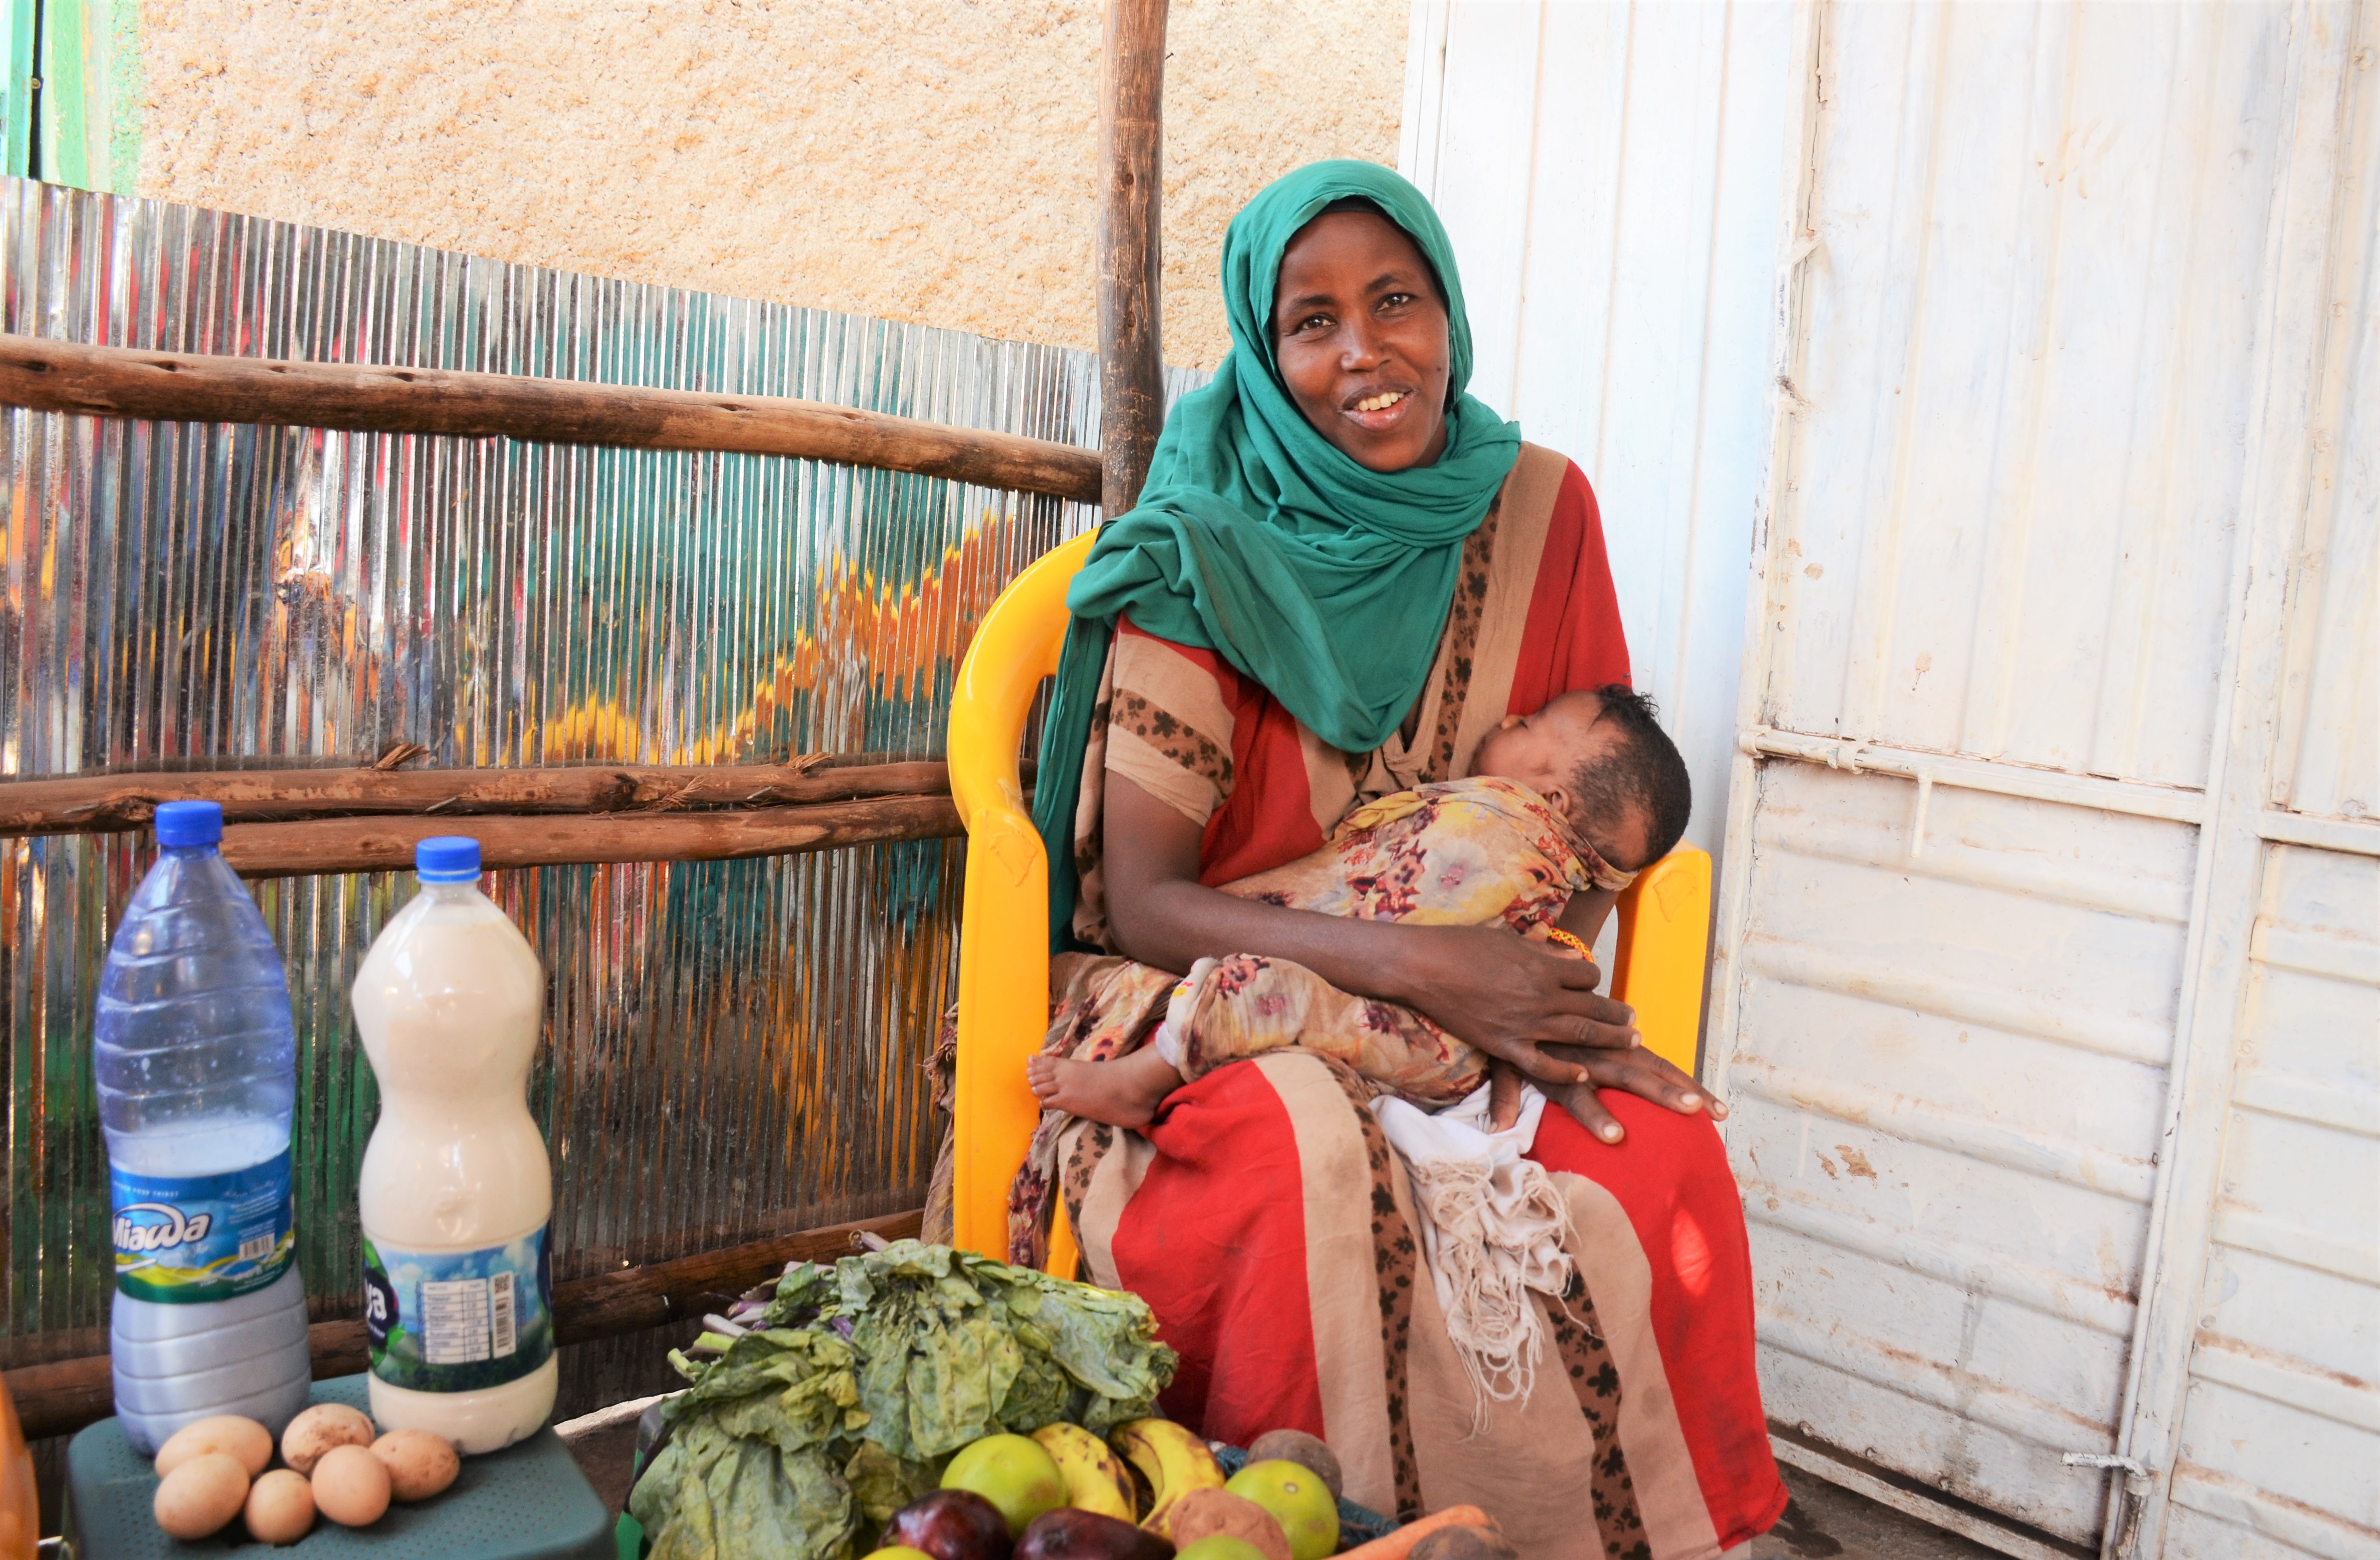 Ethiopian woman holding baby